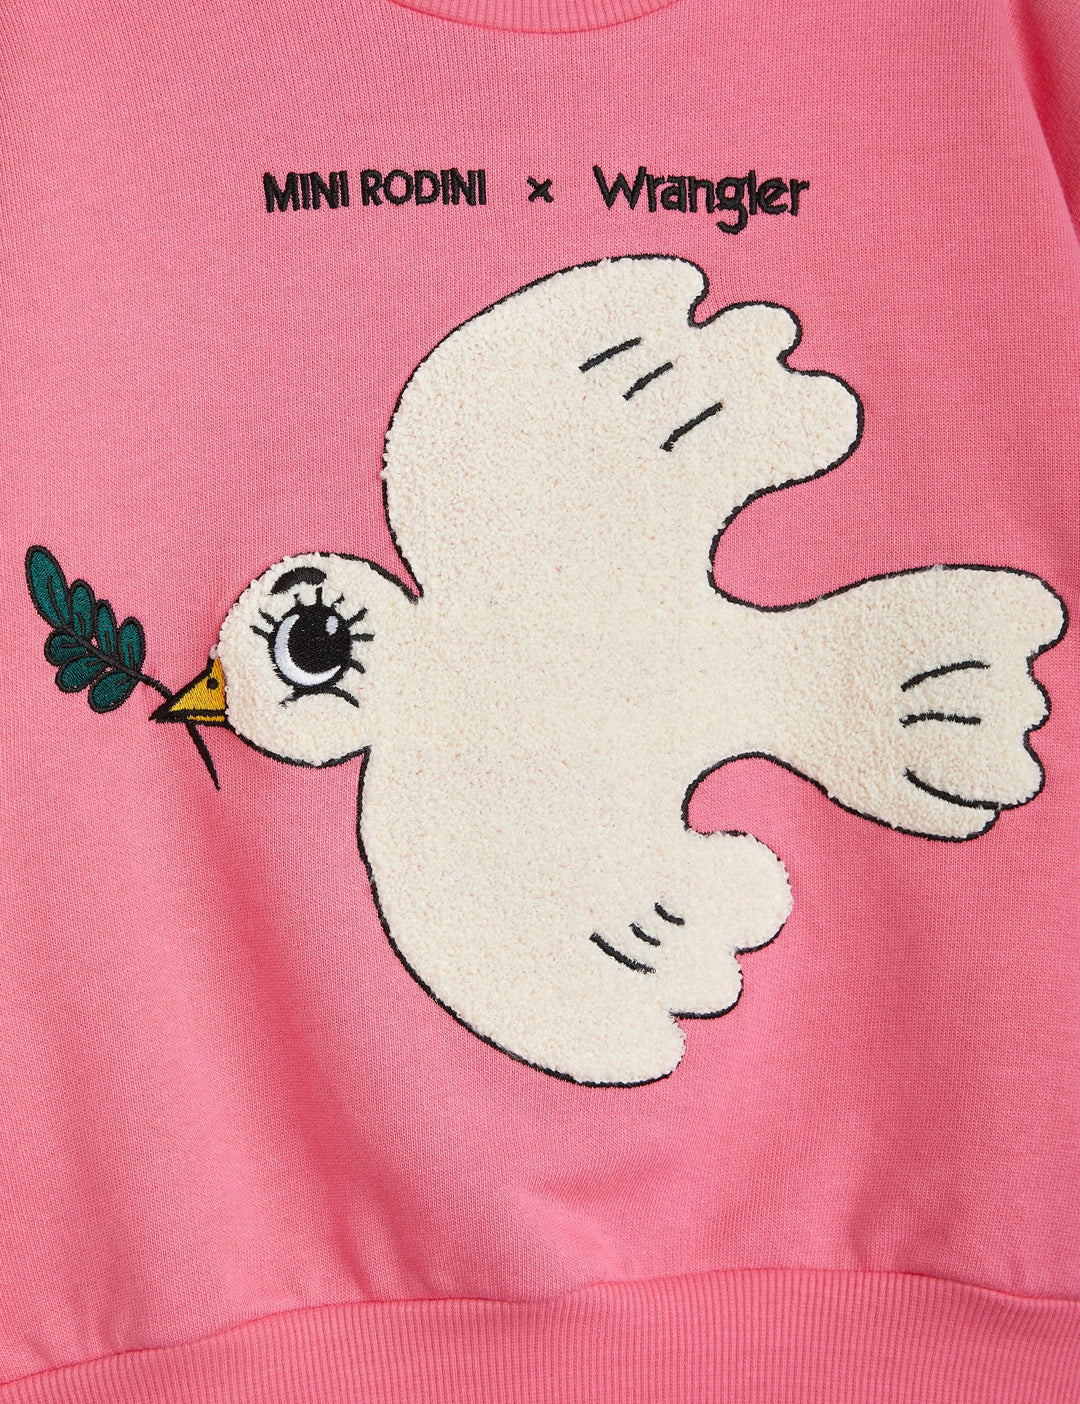 Mini Rodini x Wrangler Peace Dove Chenille Sweatshirt Pink